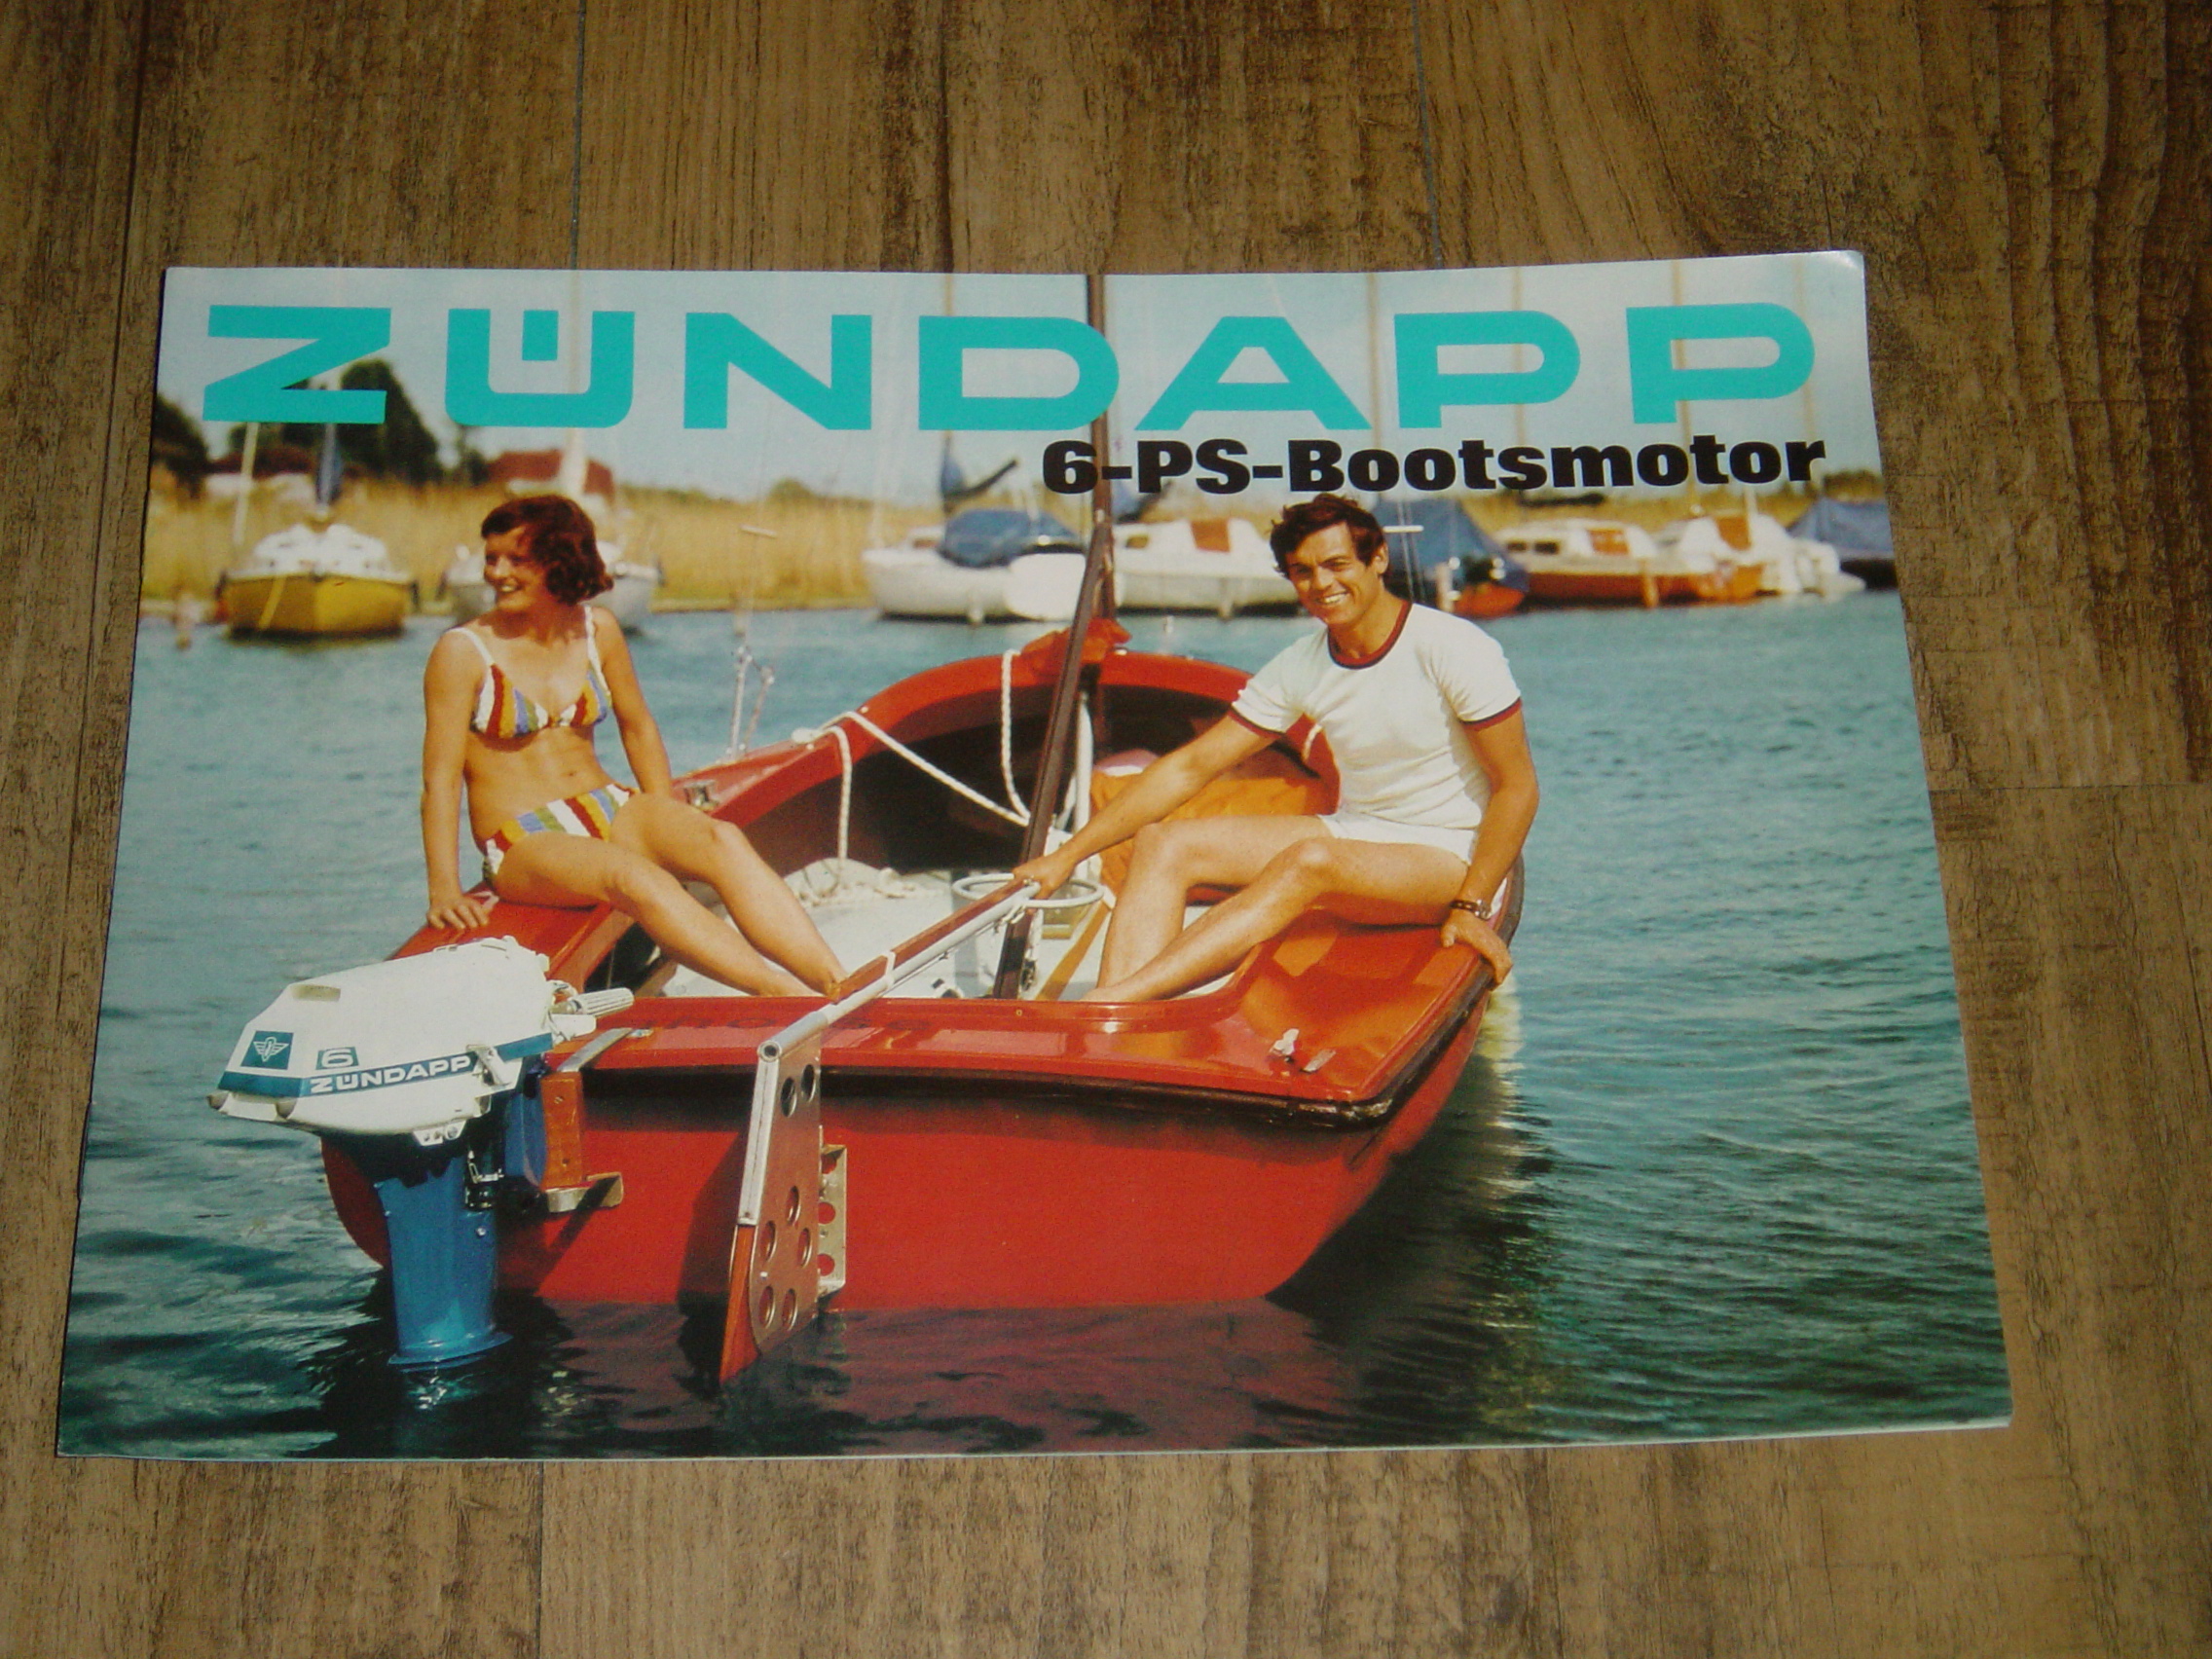 Promotional brochure D - Outboard motor model 304 6-PS